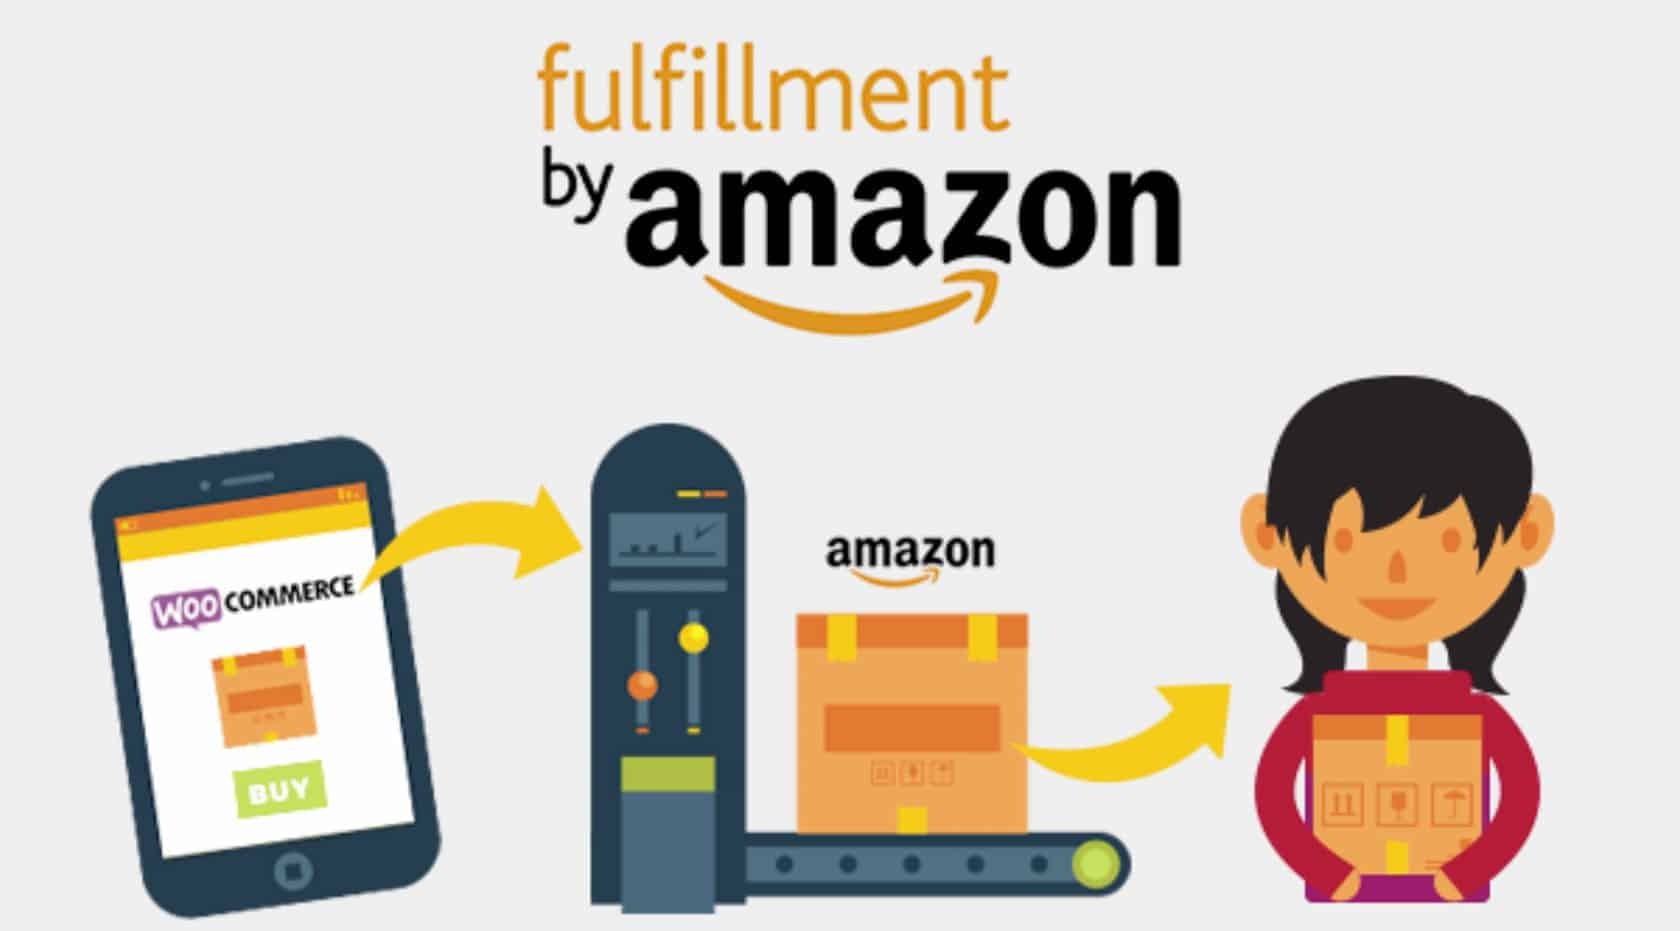 WooCommerce Amazon Fulfillment - Amazon Fulfillment WooCommerce v4.2 by Woocommerce Nulled Free Download